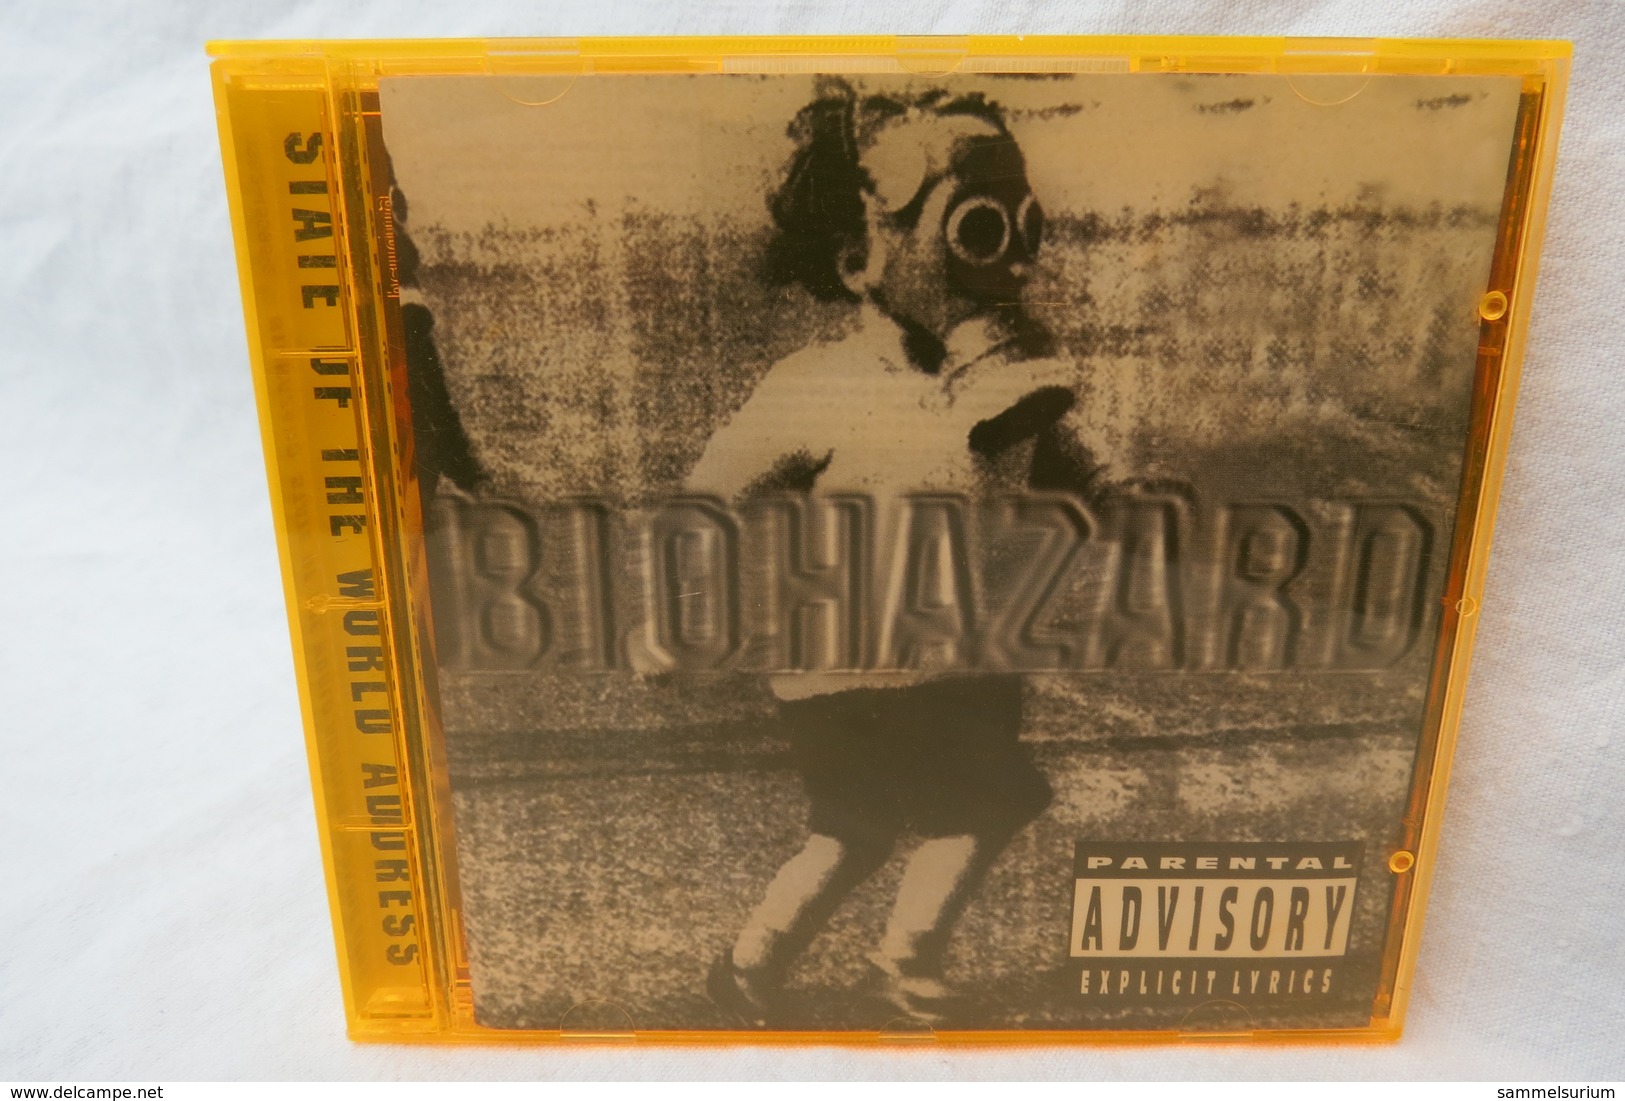 CD "Biohazard" State Of The World Address (parental Advisory Explicit Lyrics) - Ediciones Limitadas